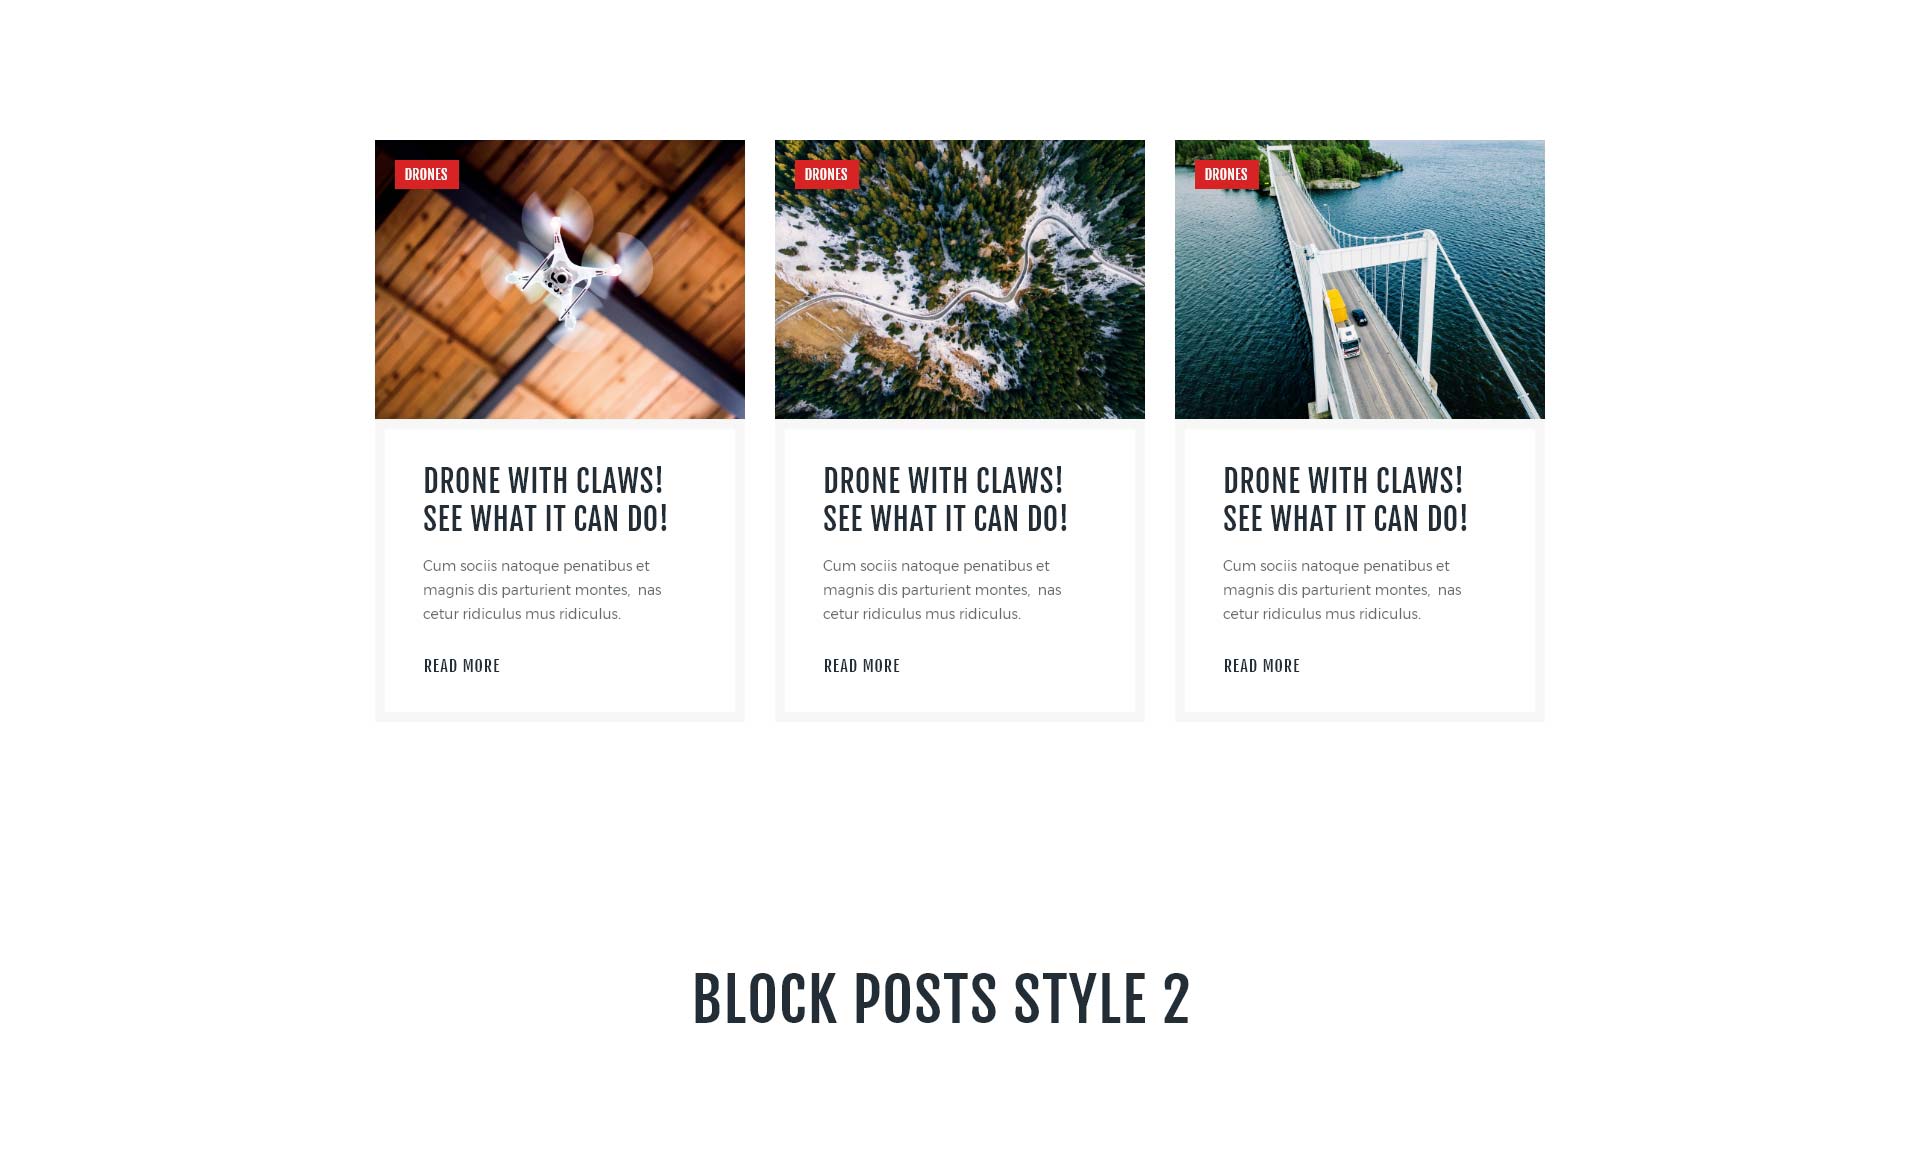 Block posts style 2